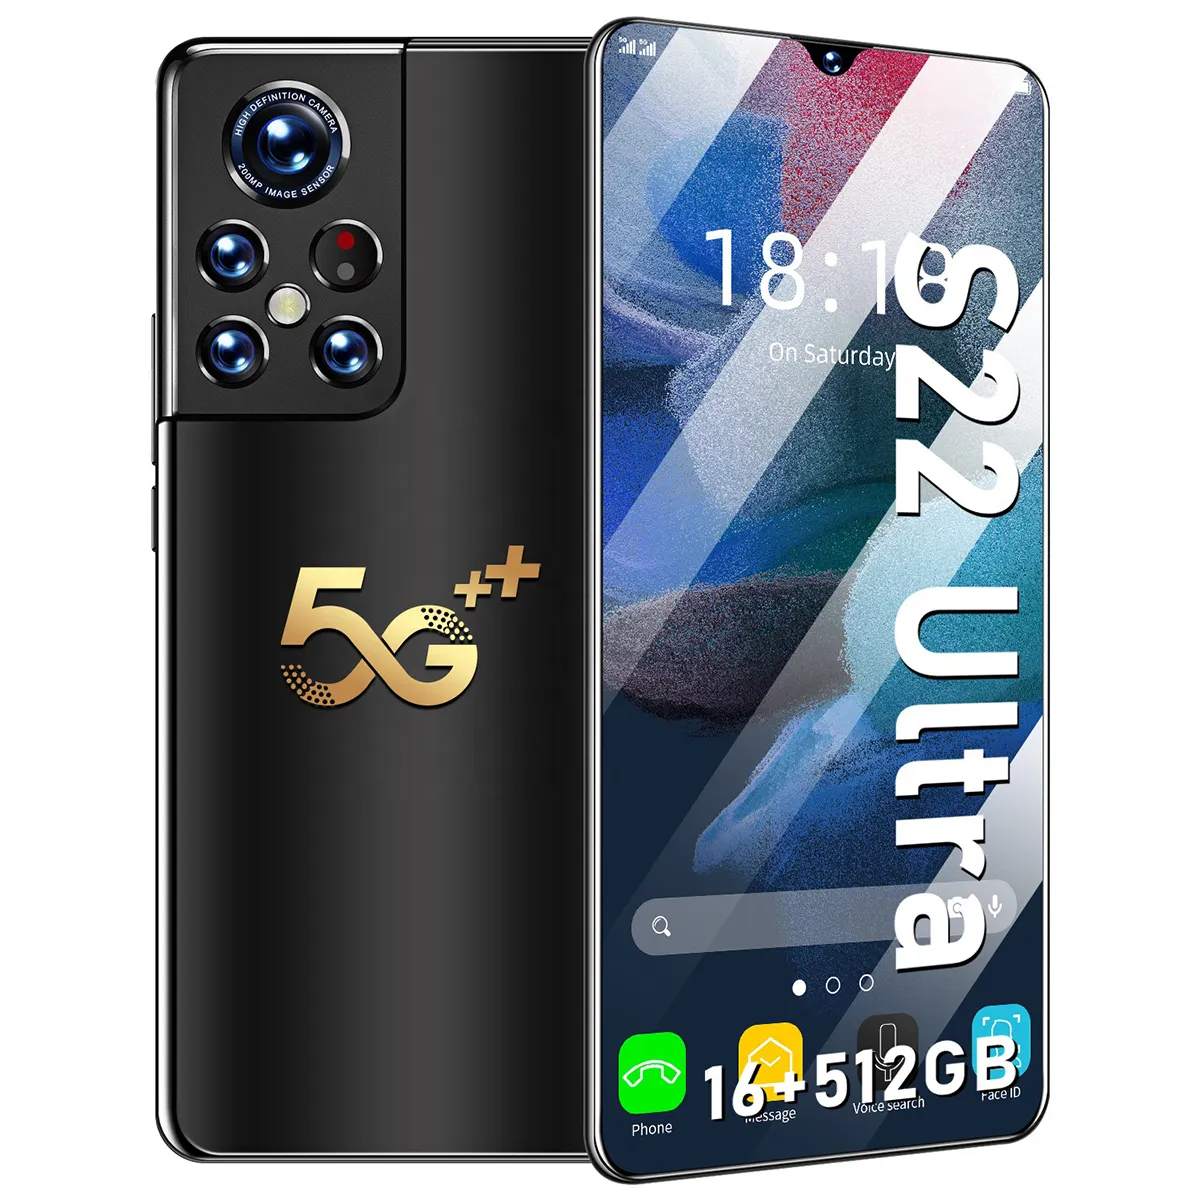 S22 ultra s21 + pro Новые смартфоны 5G Smart Mini Cell Mobile 2Nd Hand Phones дешевый телефон